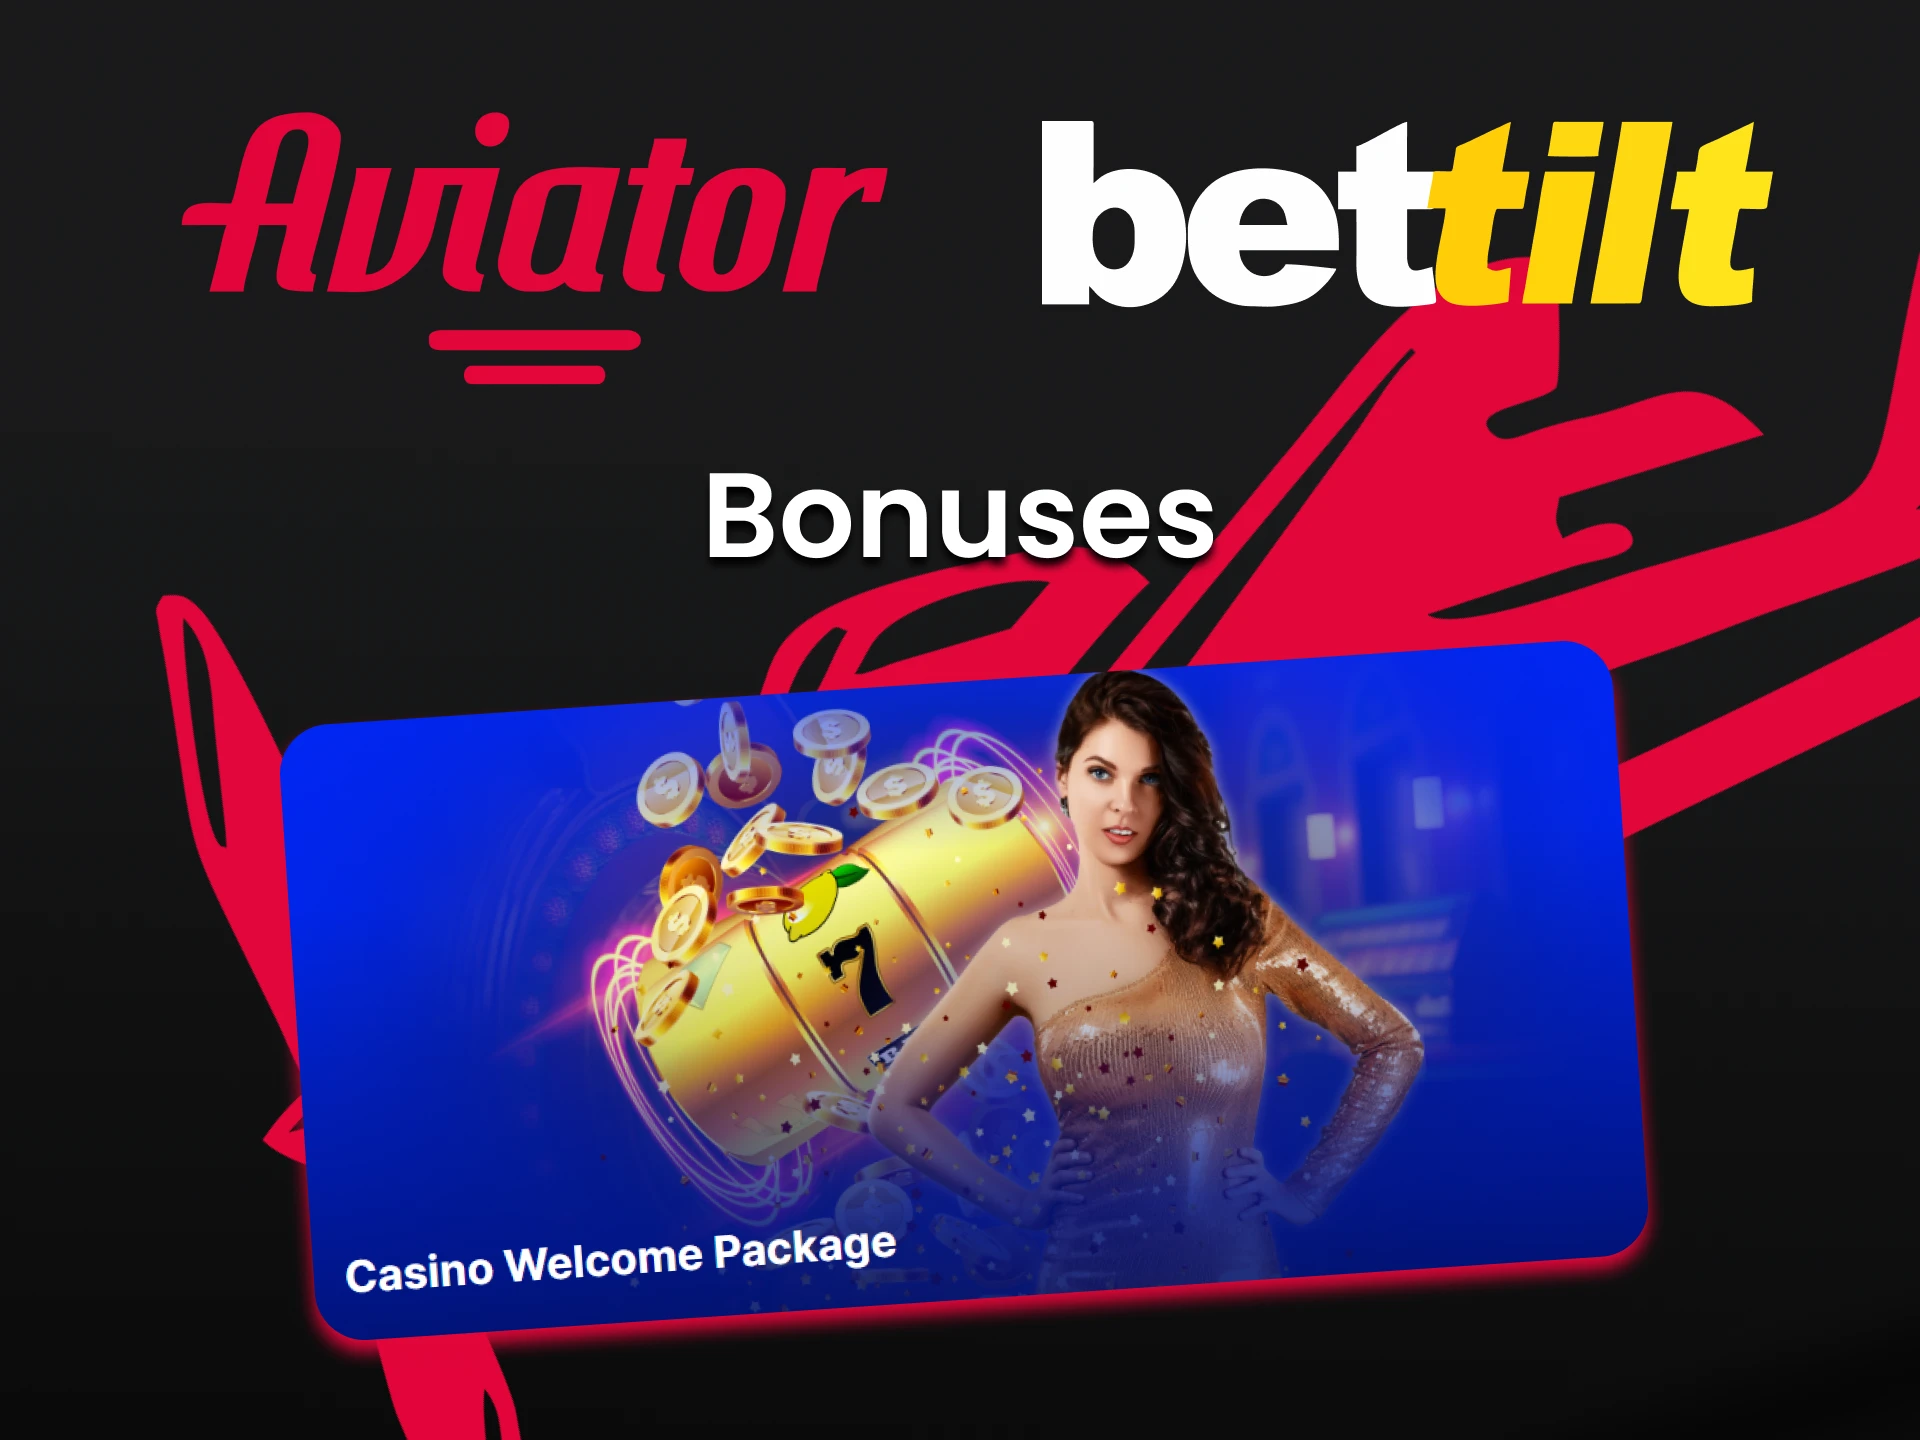 Get a bonus from Bettilt for the Aviator.